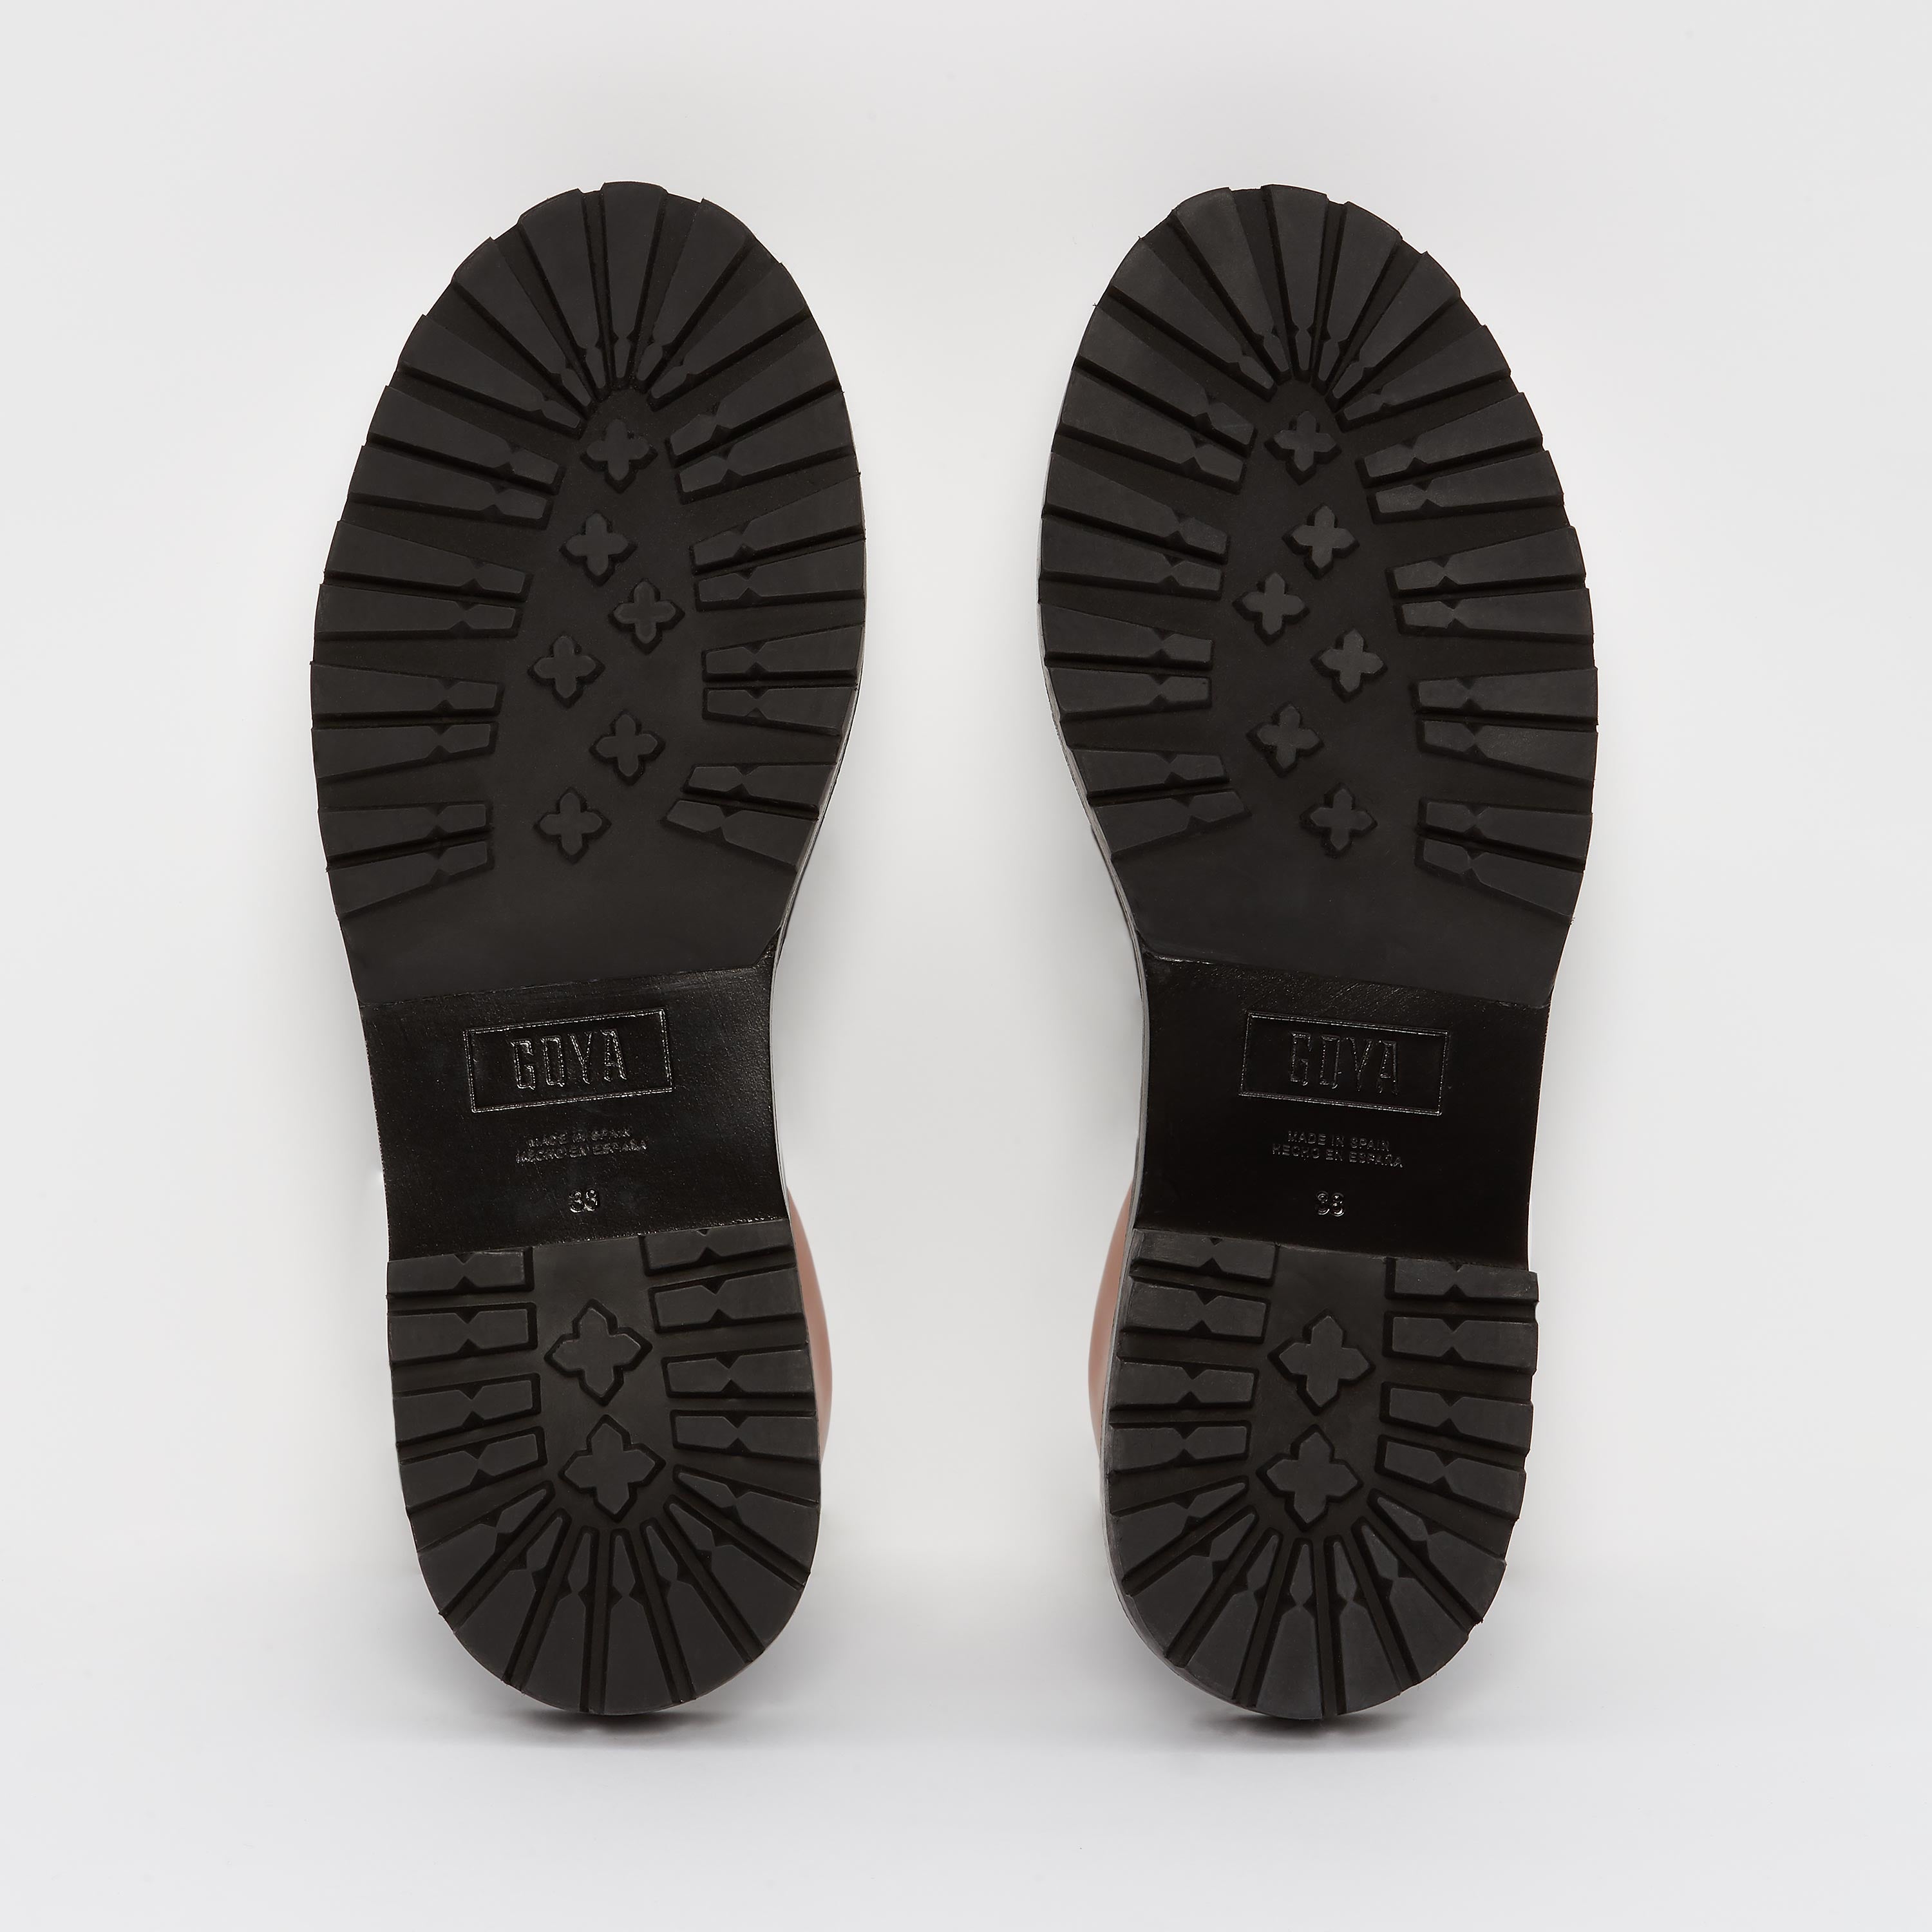 GOYA | Women's Patent Leather Slide | Luxury sandal made in Spain